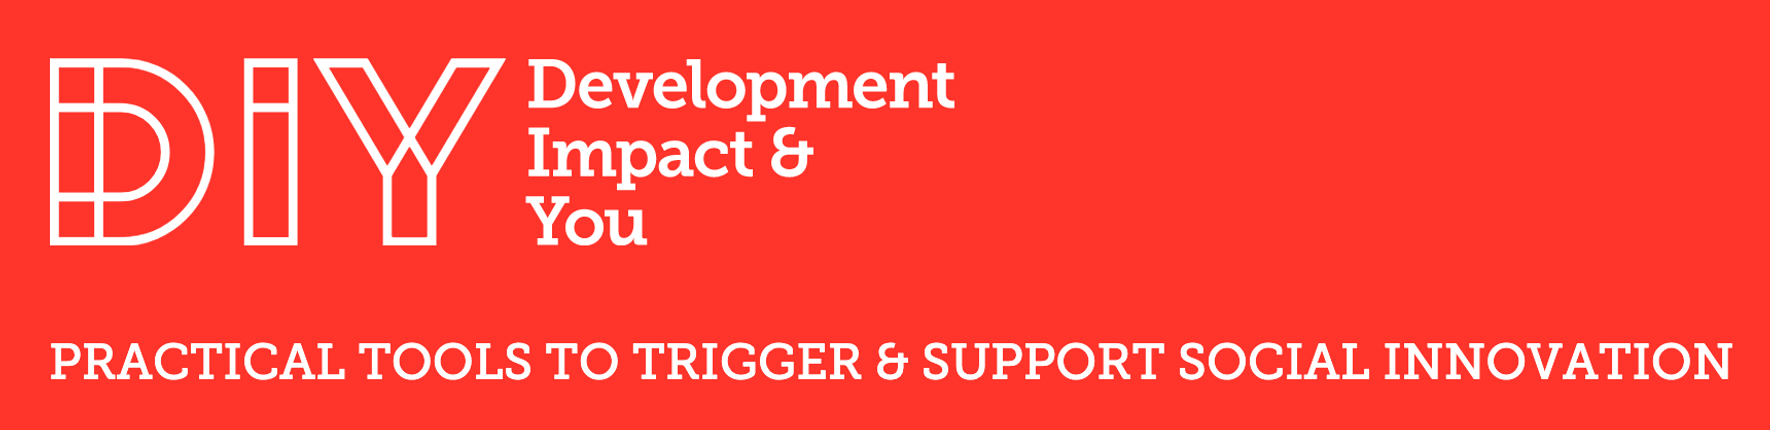 Development Impact & You